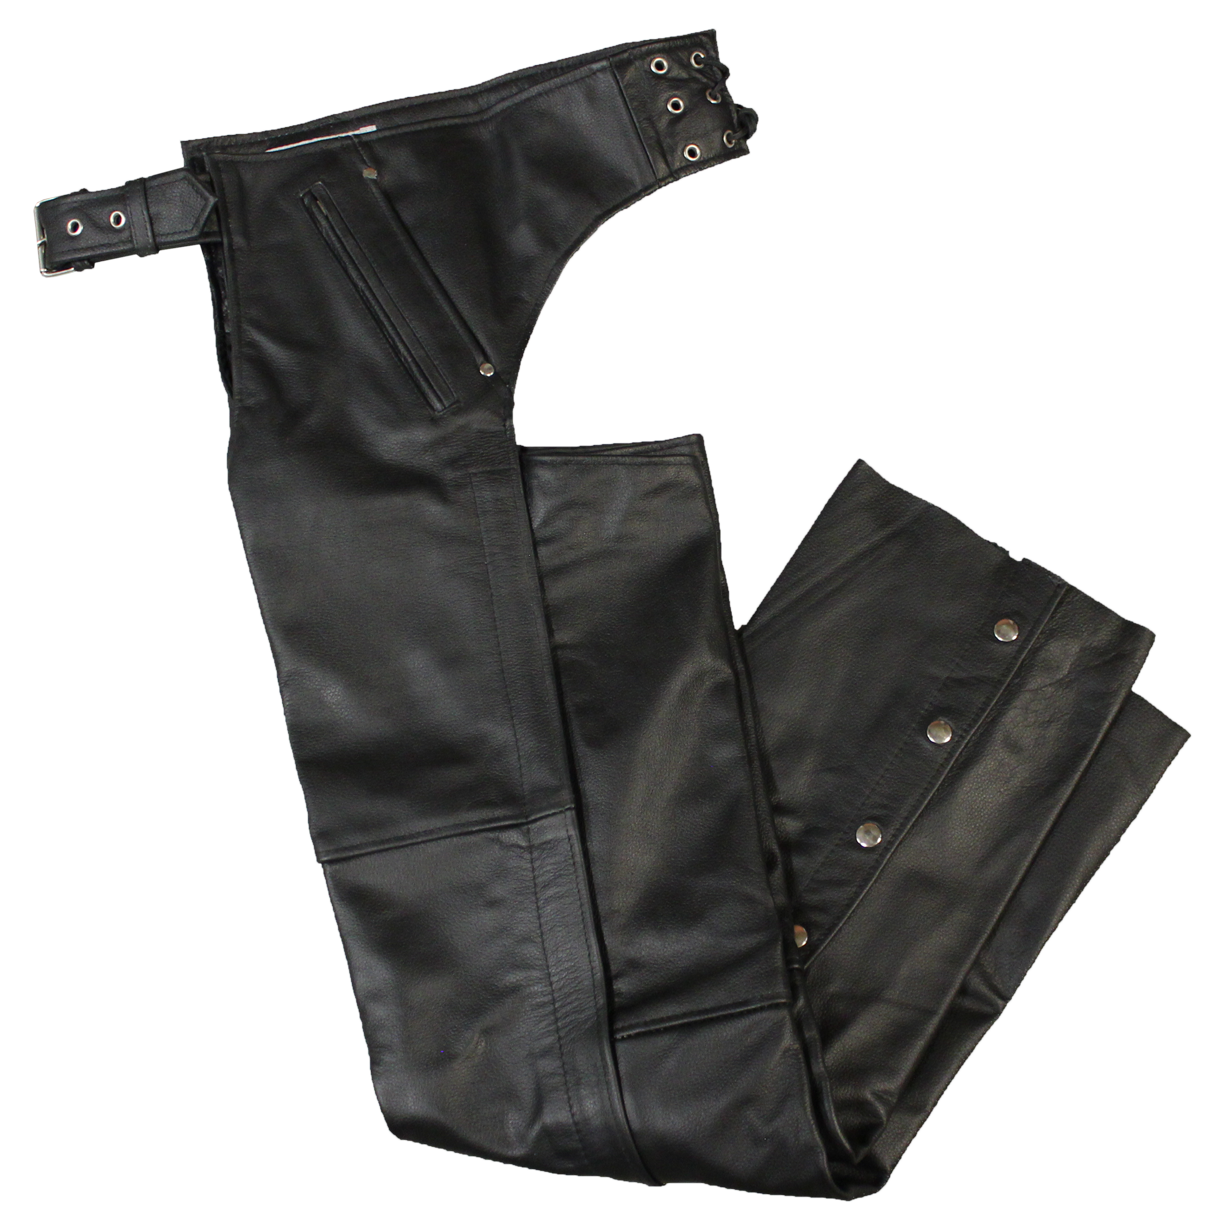 4 Pocket Premium Leather Chaps